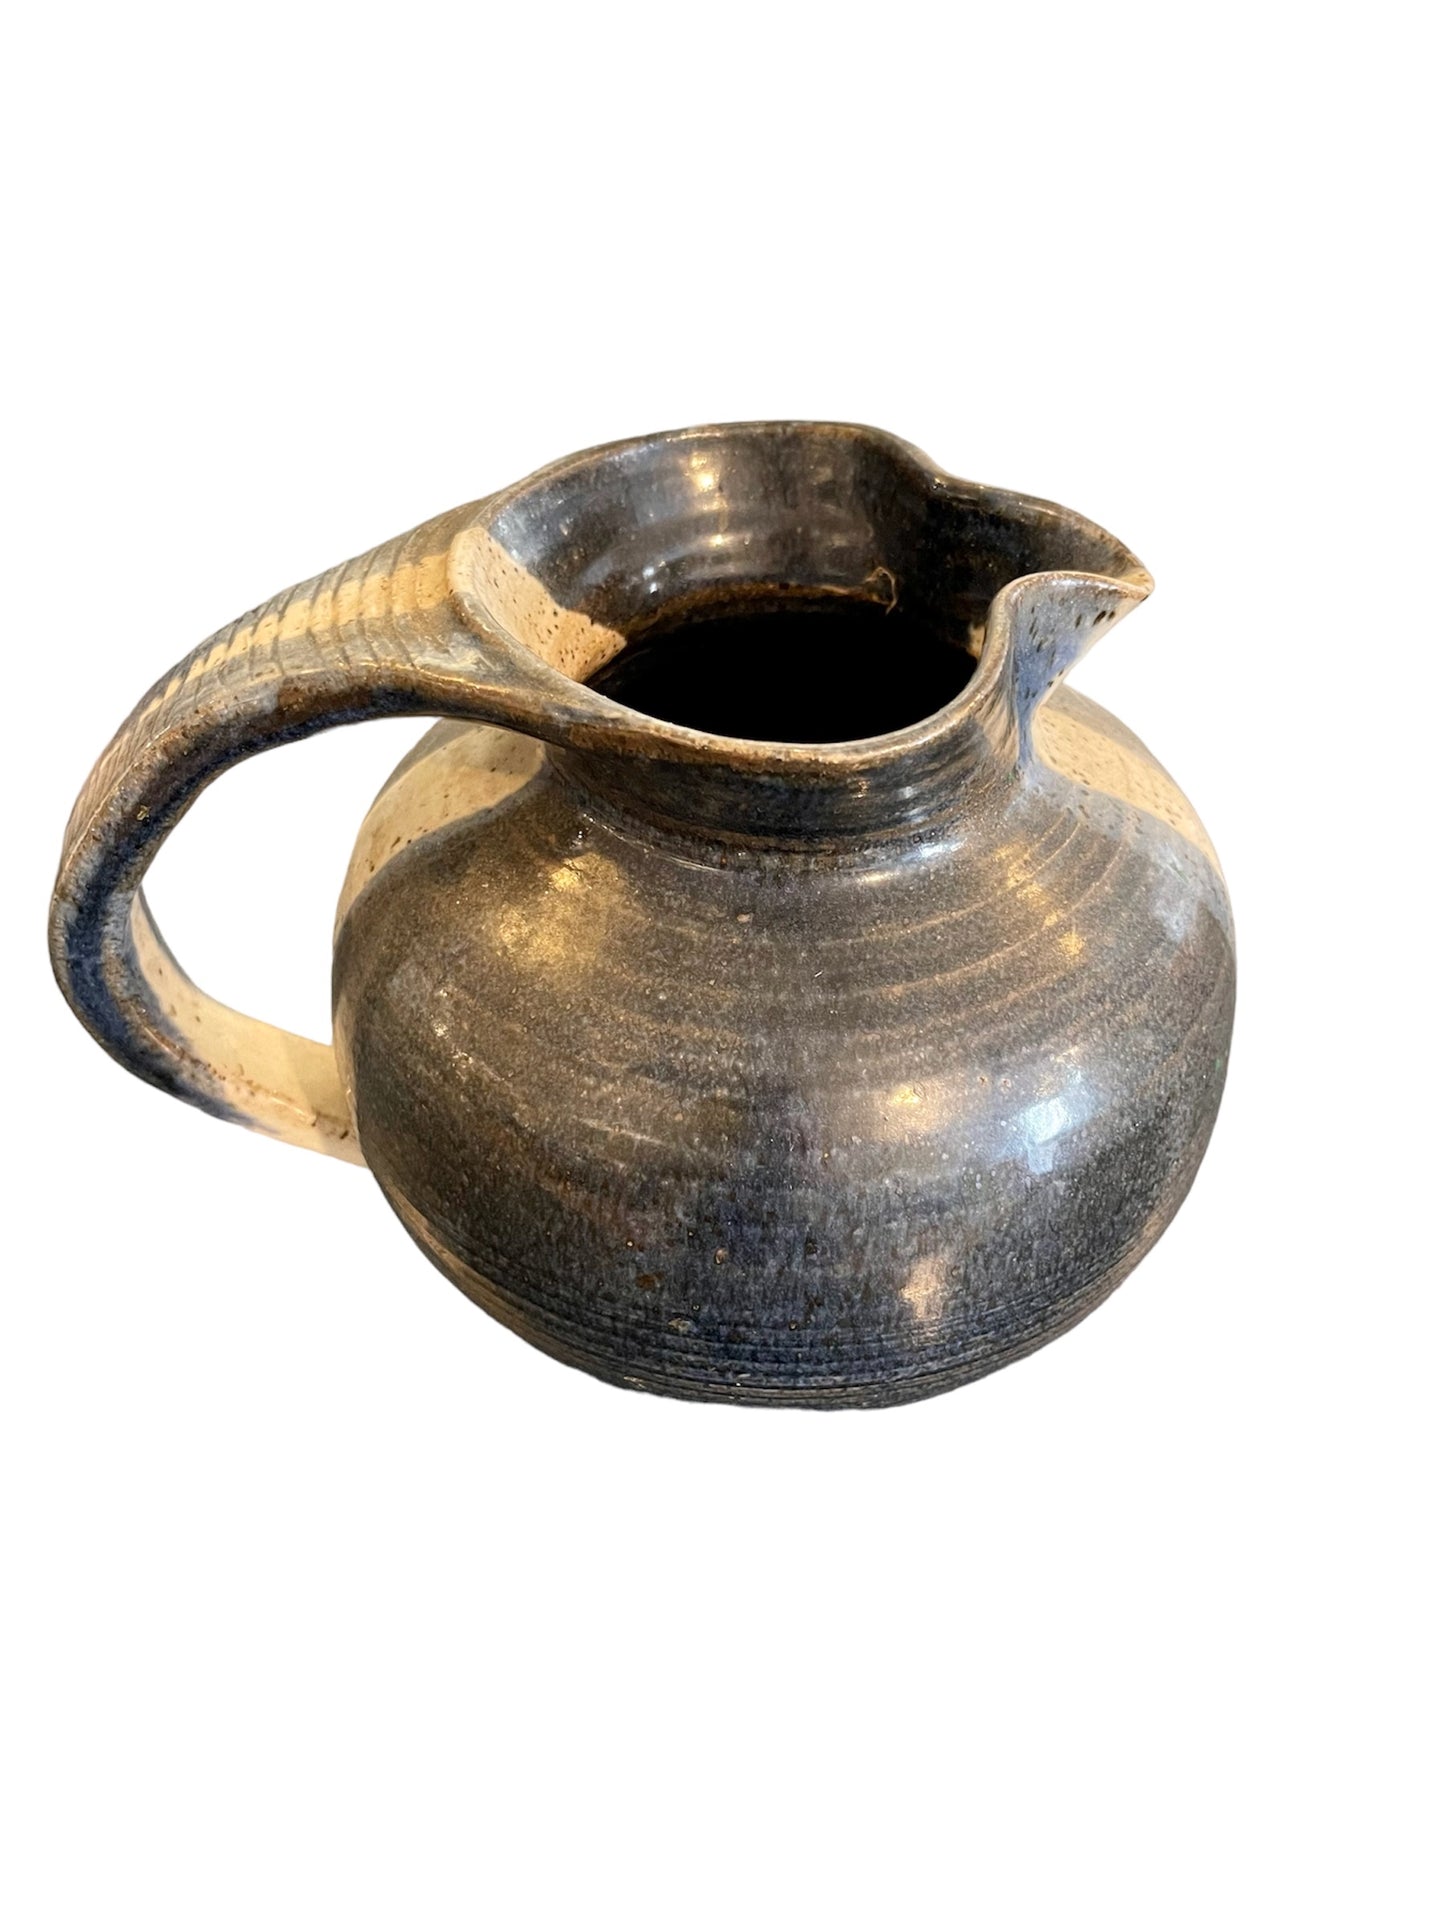 MCM Mid-Century Modern Sweedish Pottery Vase Pitcher